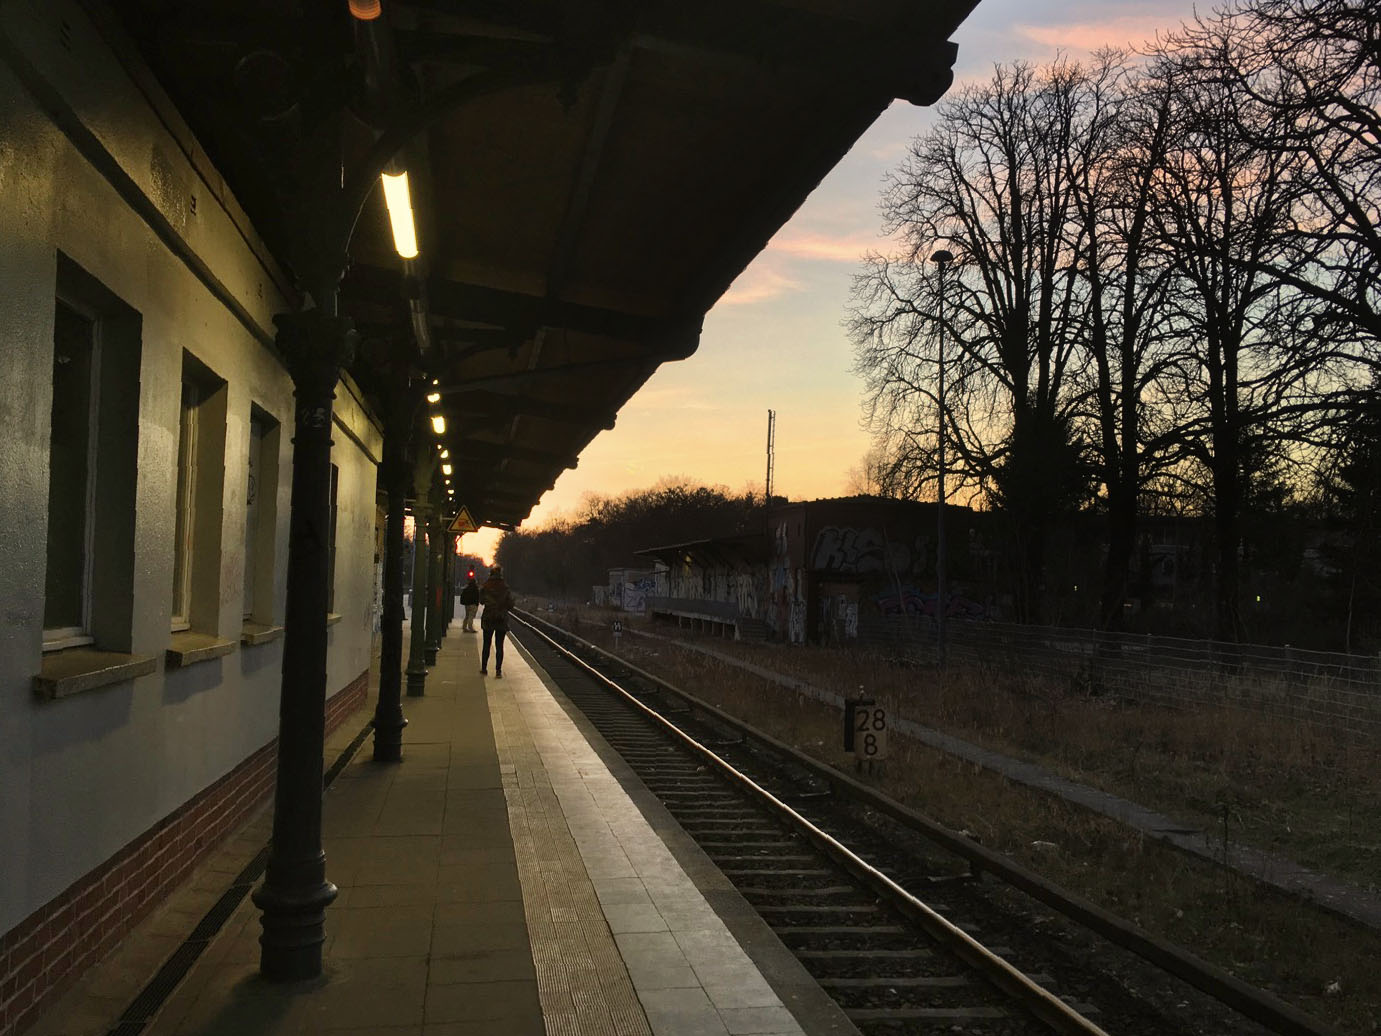 Griebnitzsee station